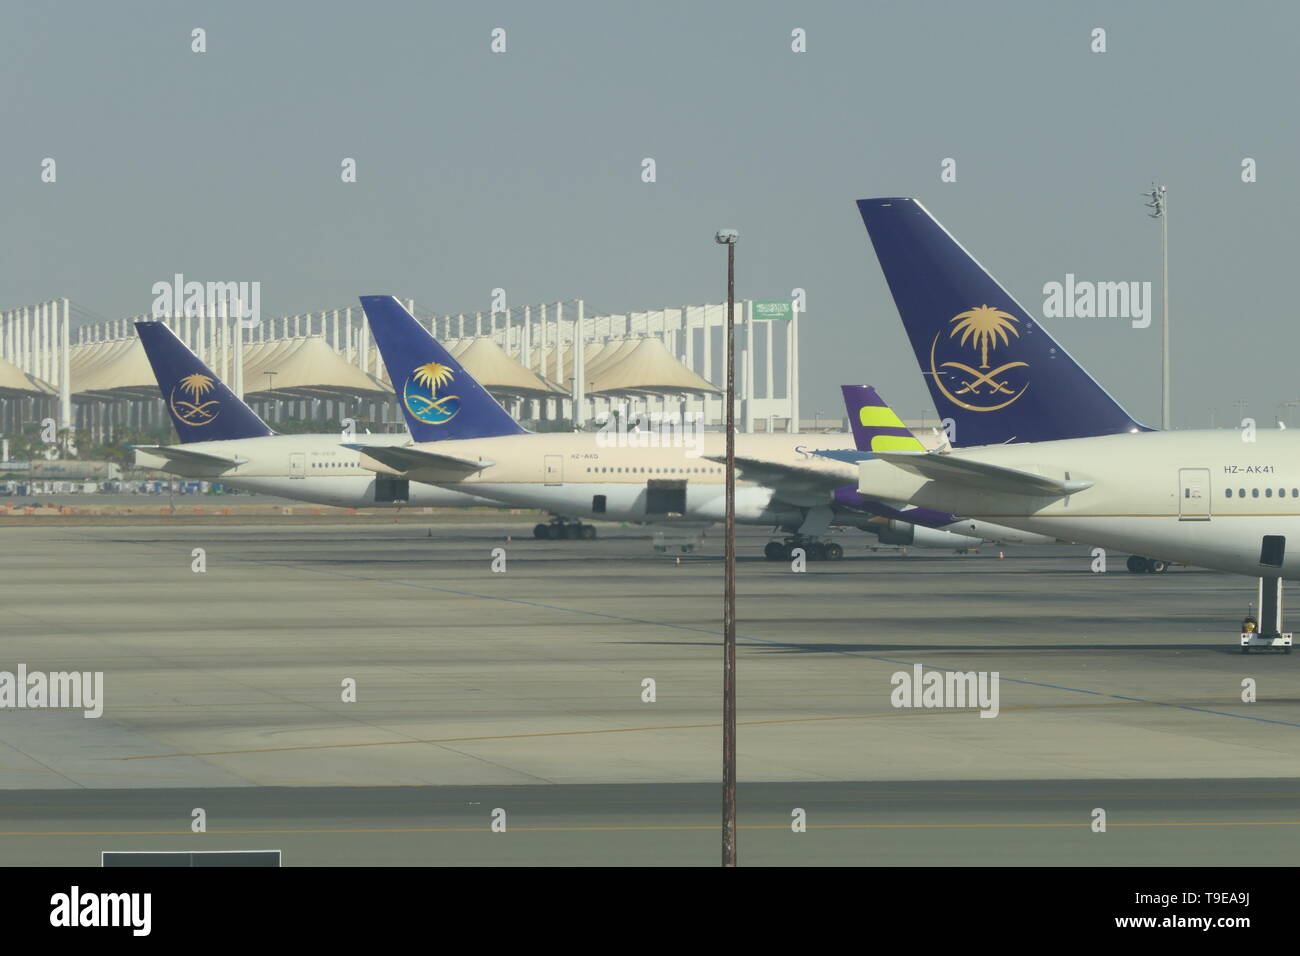 JEDDAH, SAUDI ARABIA - DECEMBER 22, 2018: Three SAUDIA Airplanes on the King Abdulaziz International Airport Stock Photo